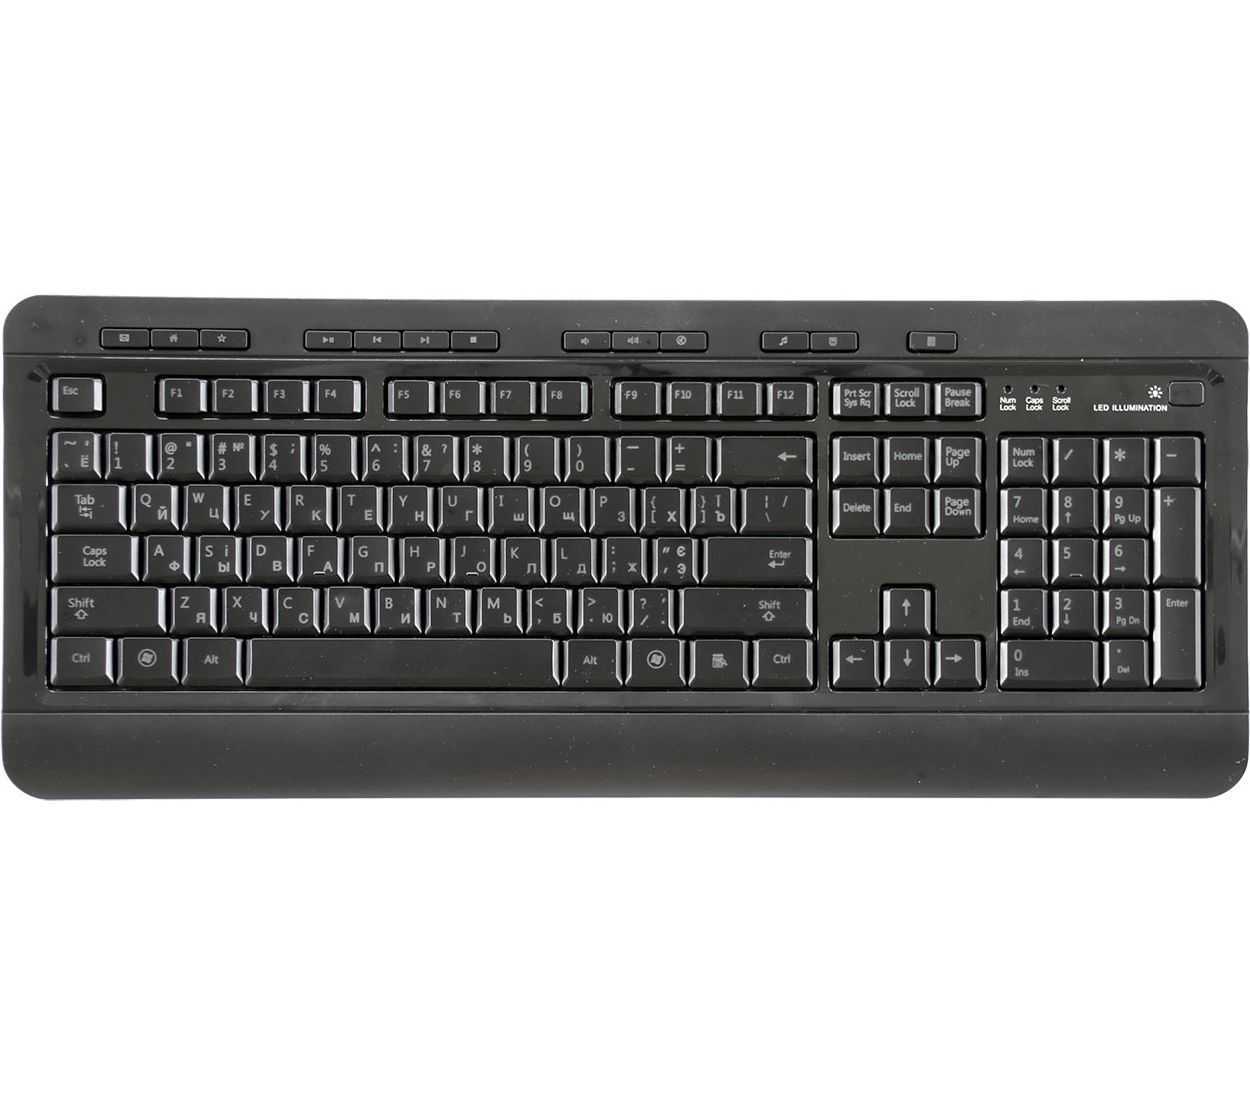 Hq kb-310fmc black usb - купить , скидки, цена, отзывы, обзор, характеристики - клавиатуры